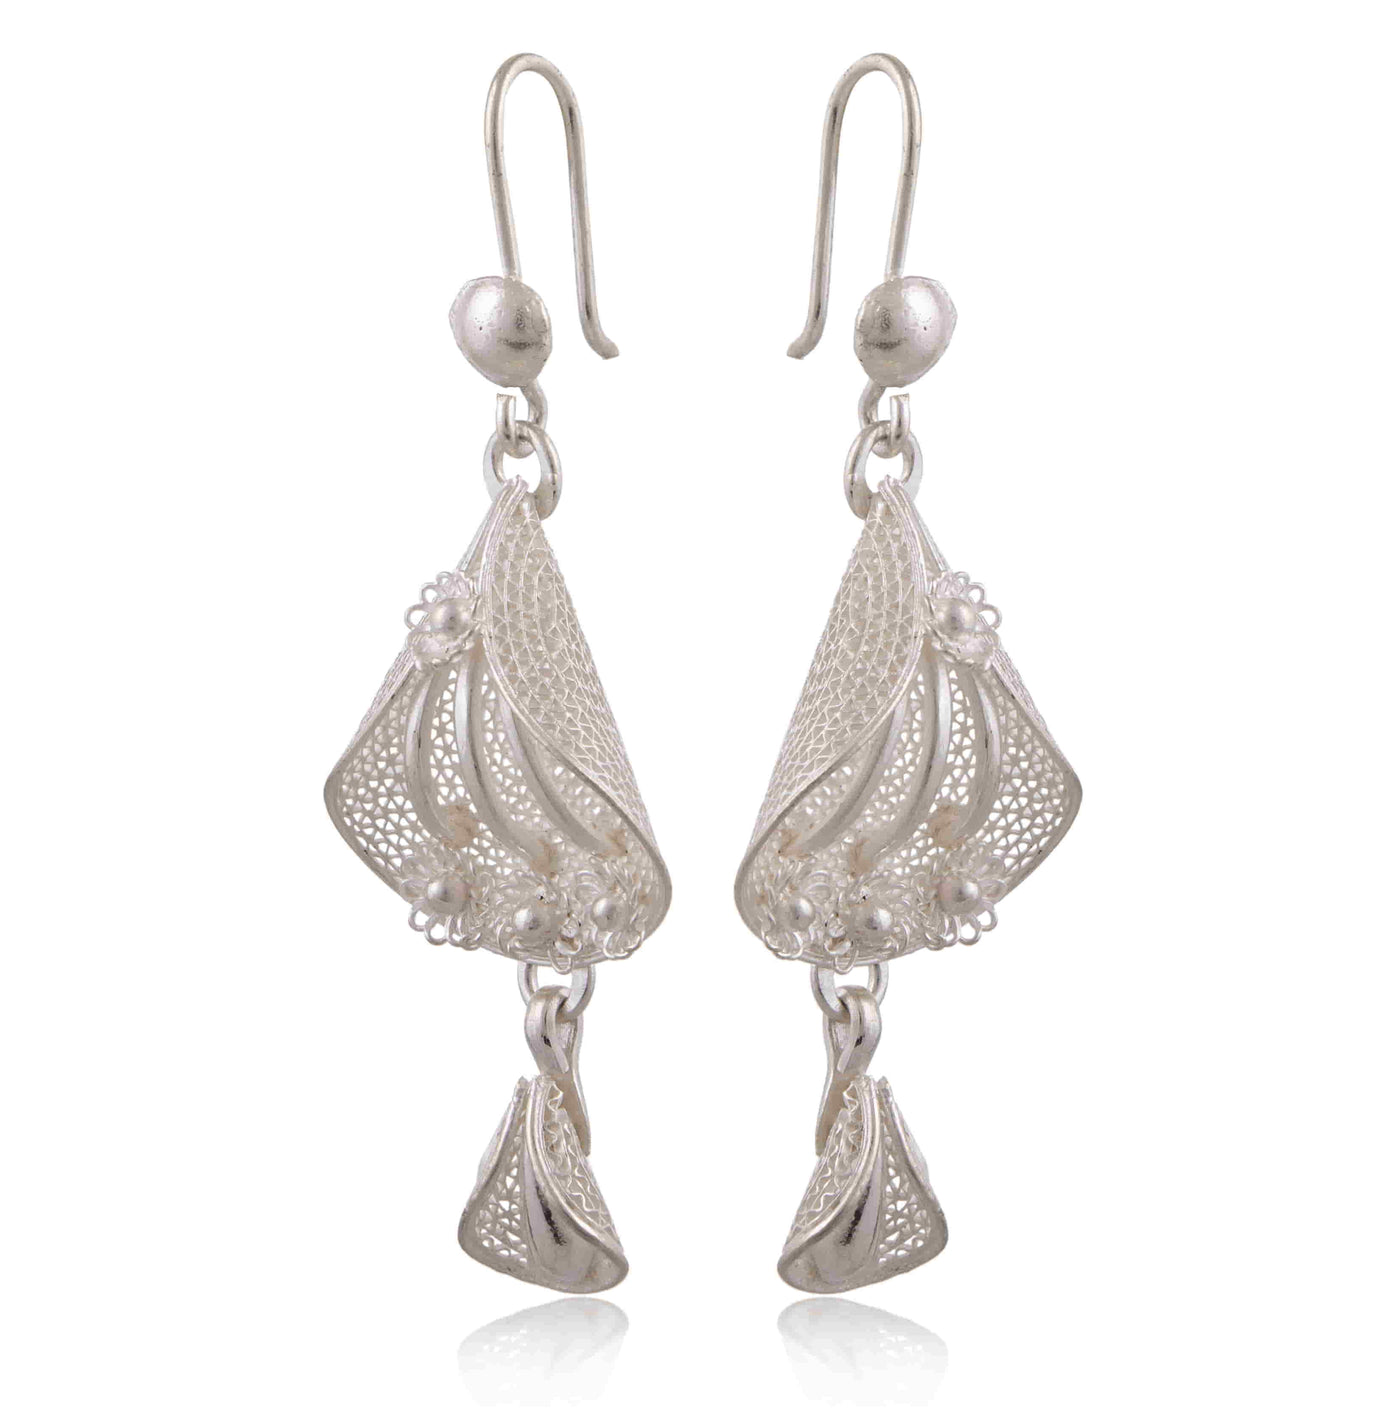 Floral Bouquet - Silver Filigree earrings SJ-996 - Fashion & Lifestyle - 2